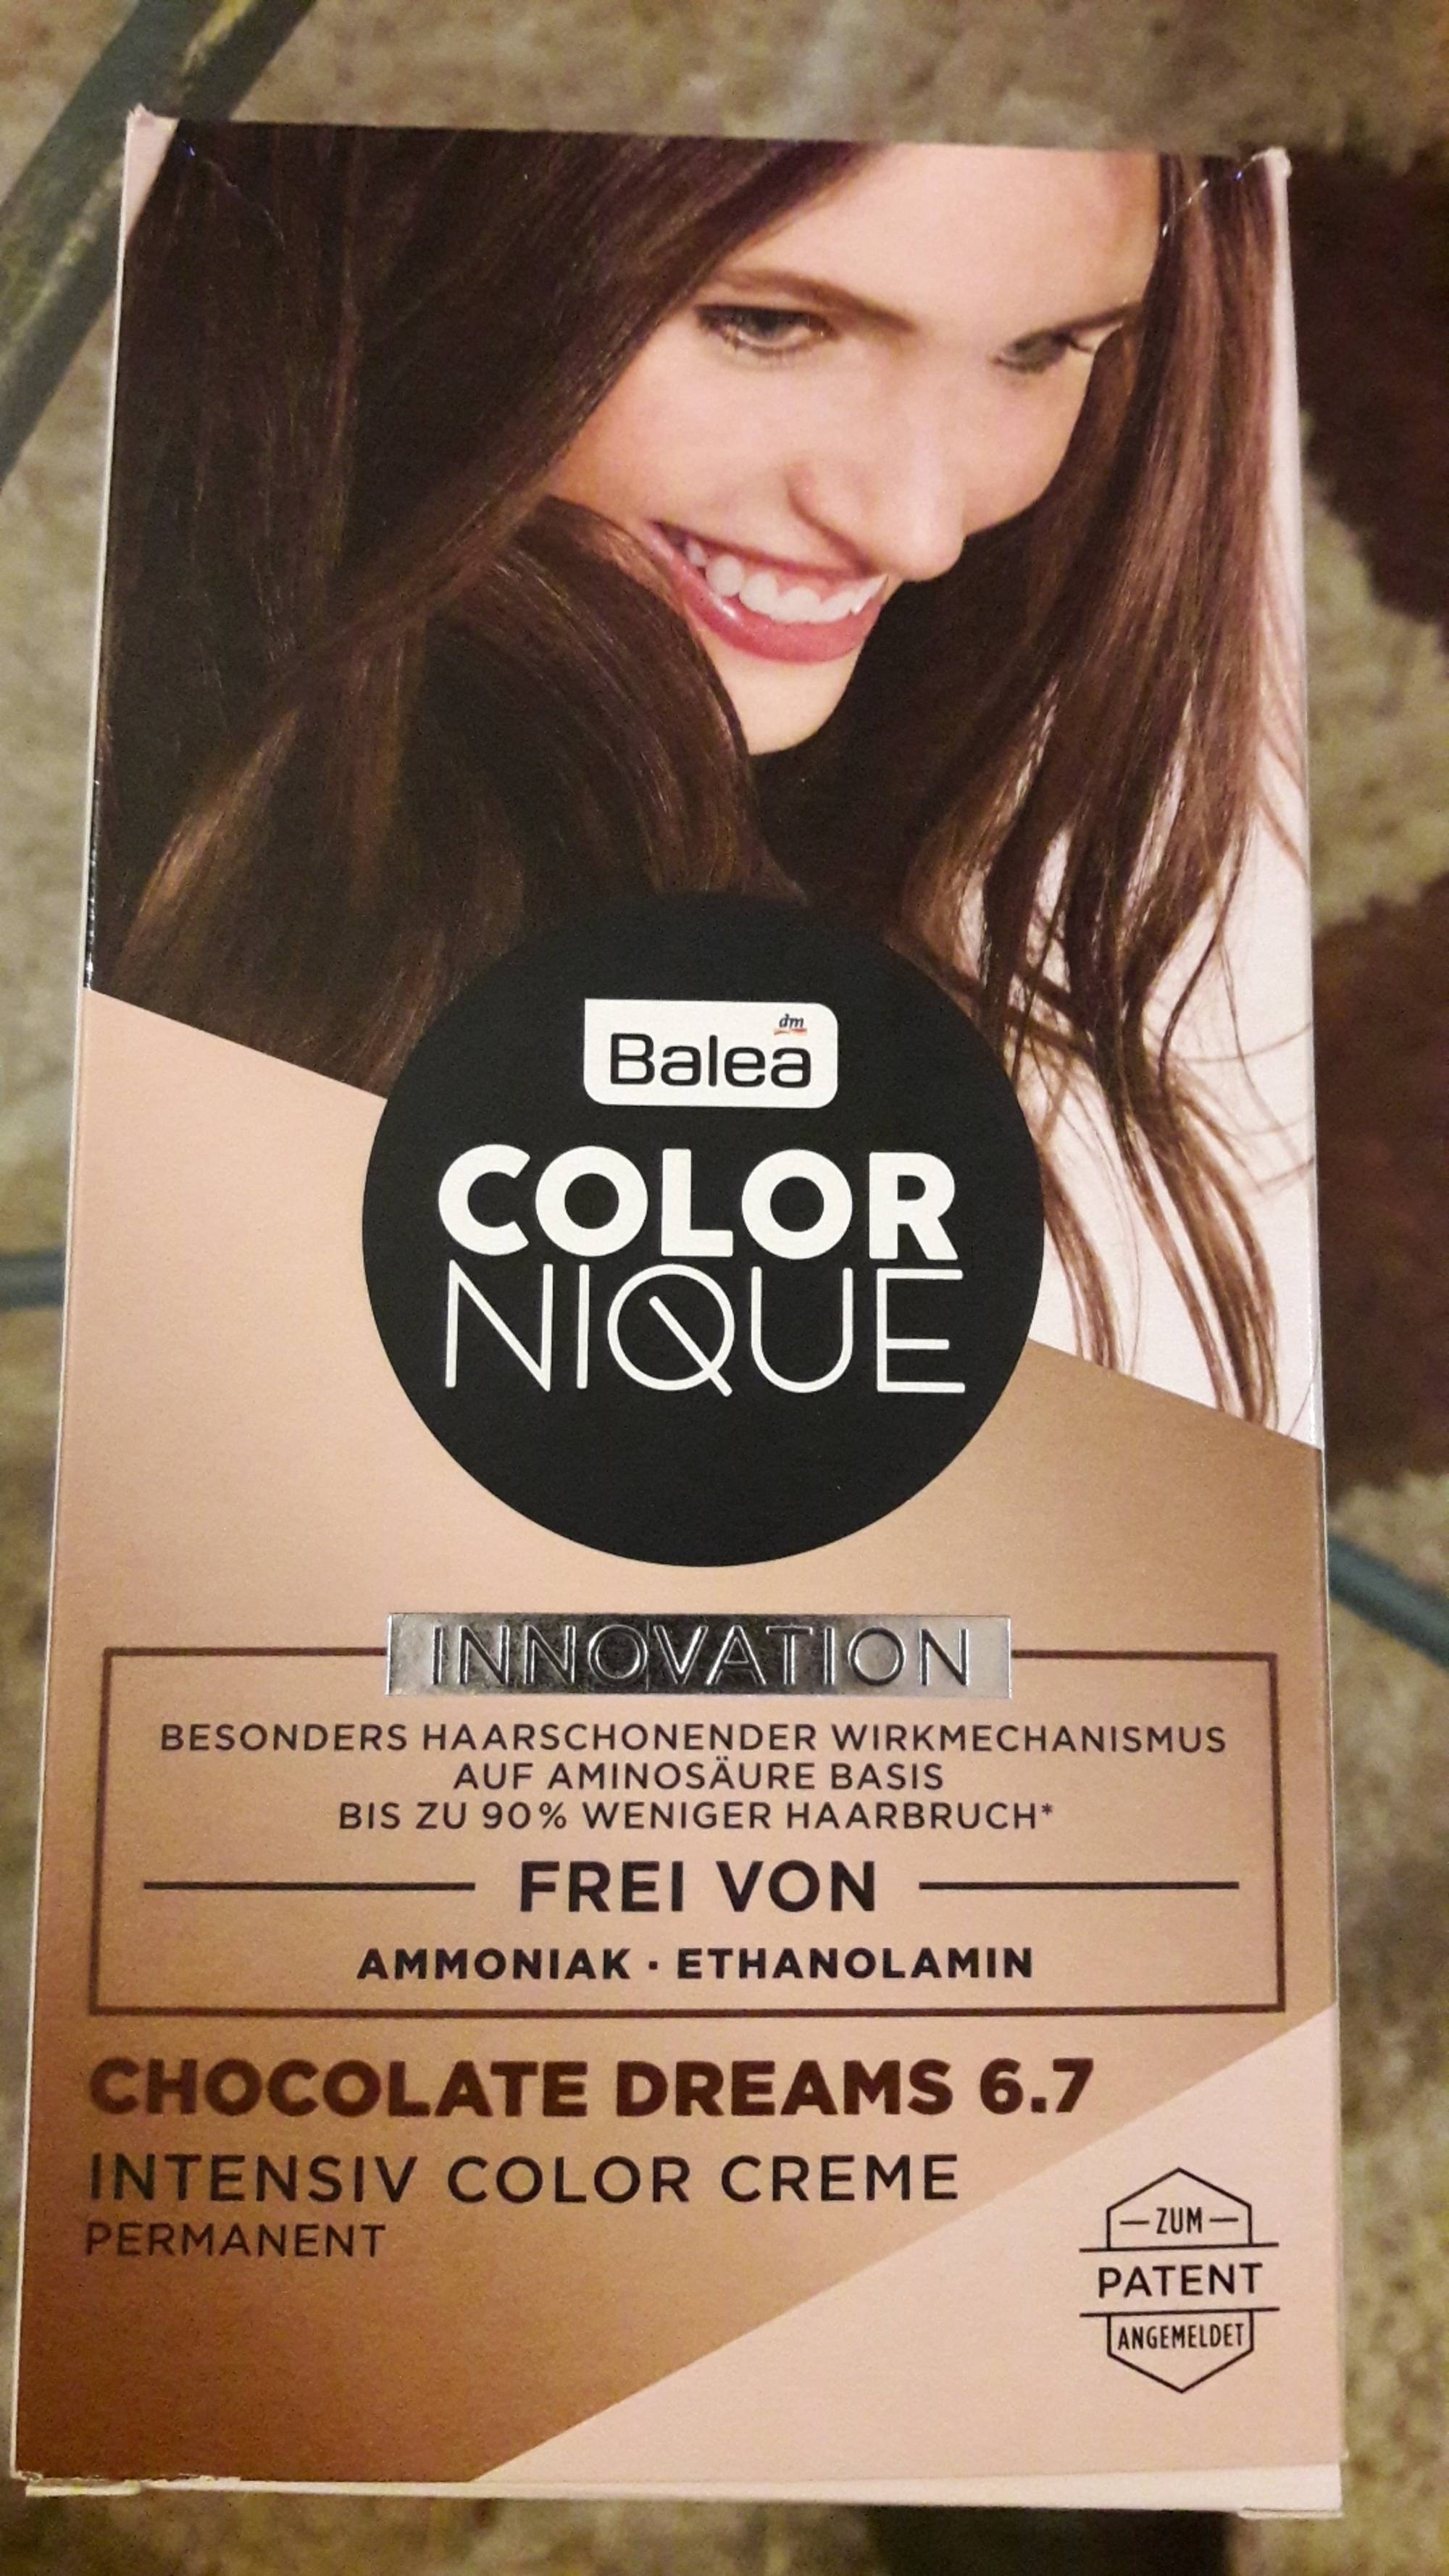 BALEA - Color nique - Intensiv color creme chocolate dreams 6.7